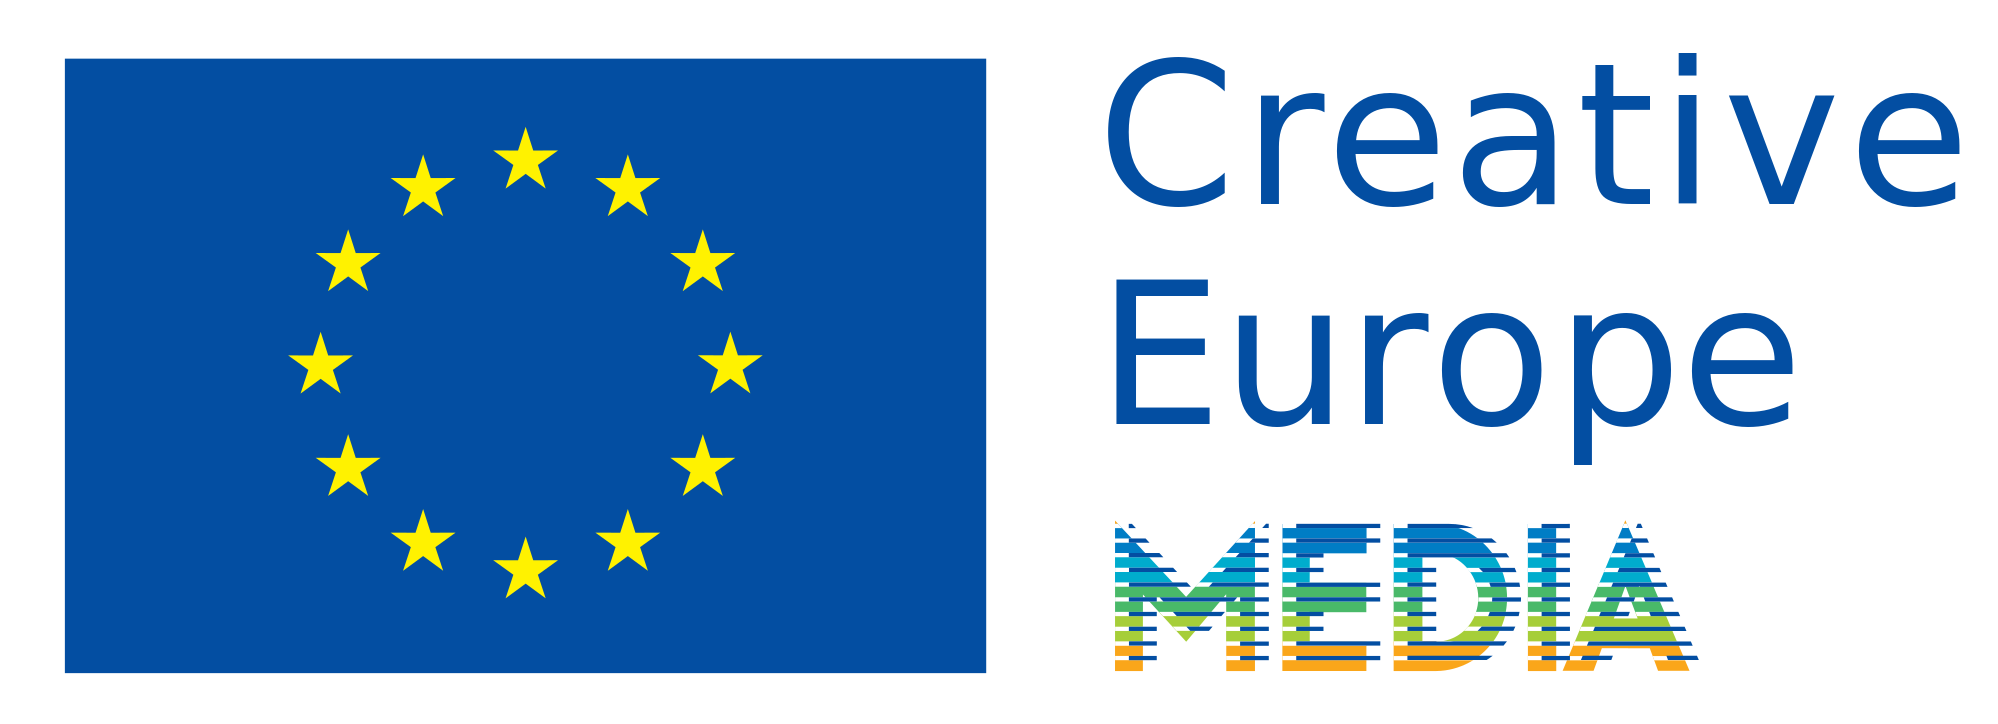 MEDIA sub-programme of Creative Europe